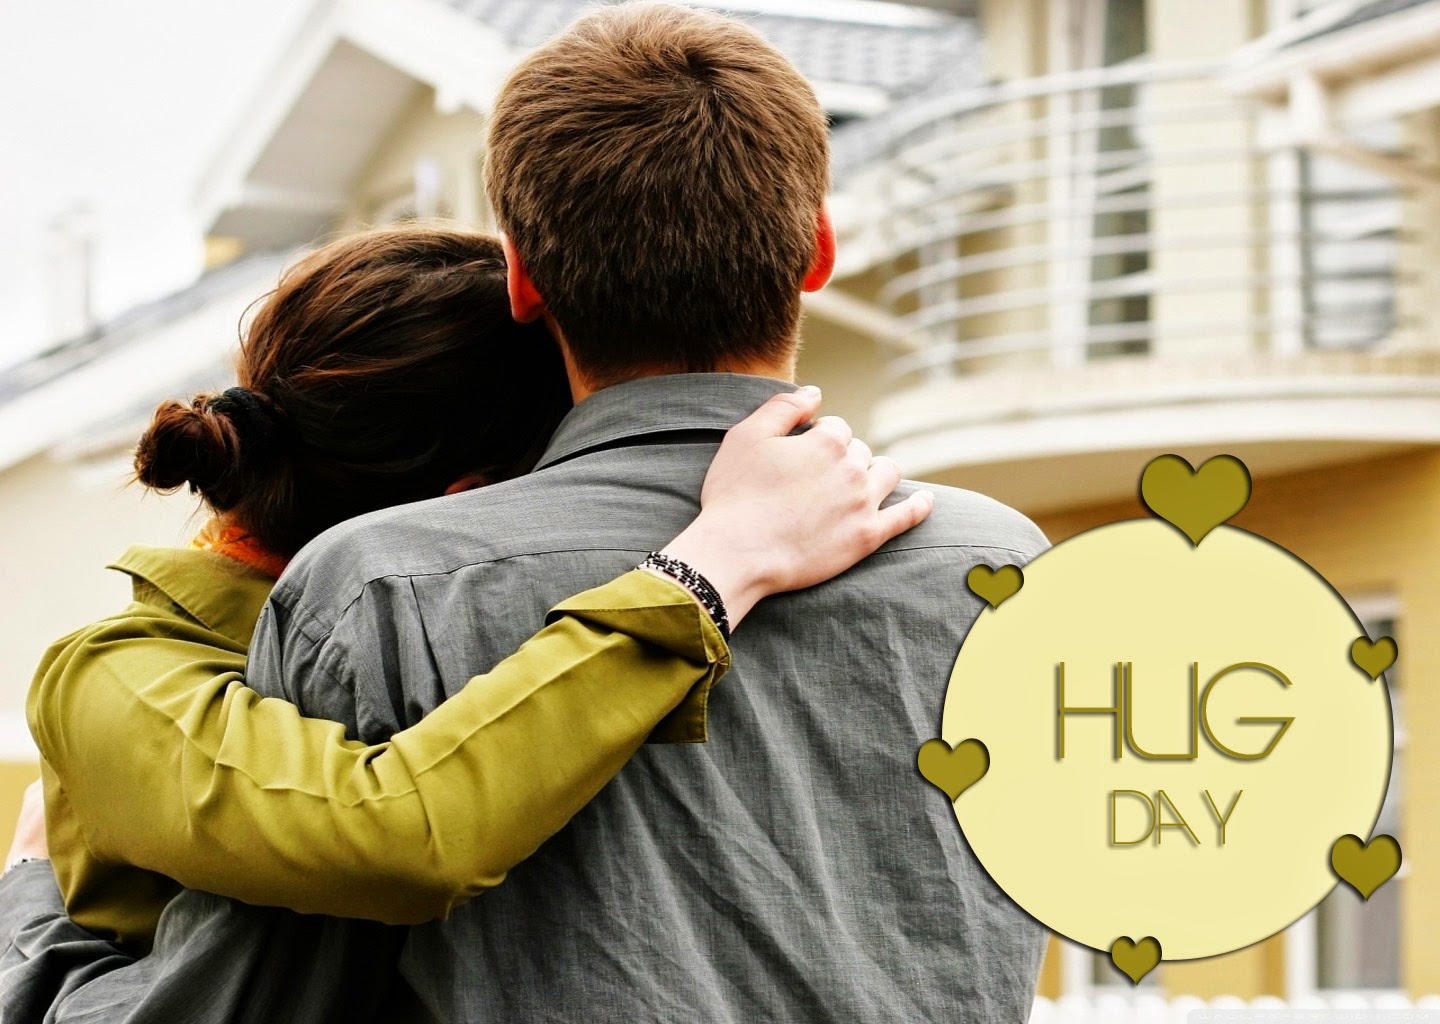 Happy Hug Day Image Wallpaper Pics For Girlfriend N Boyfriend